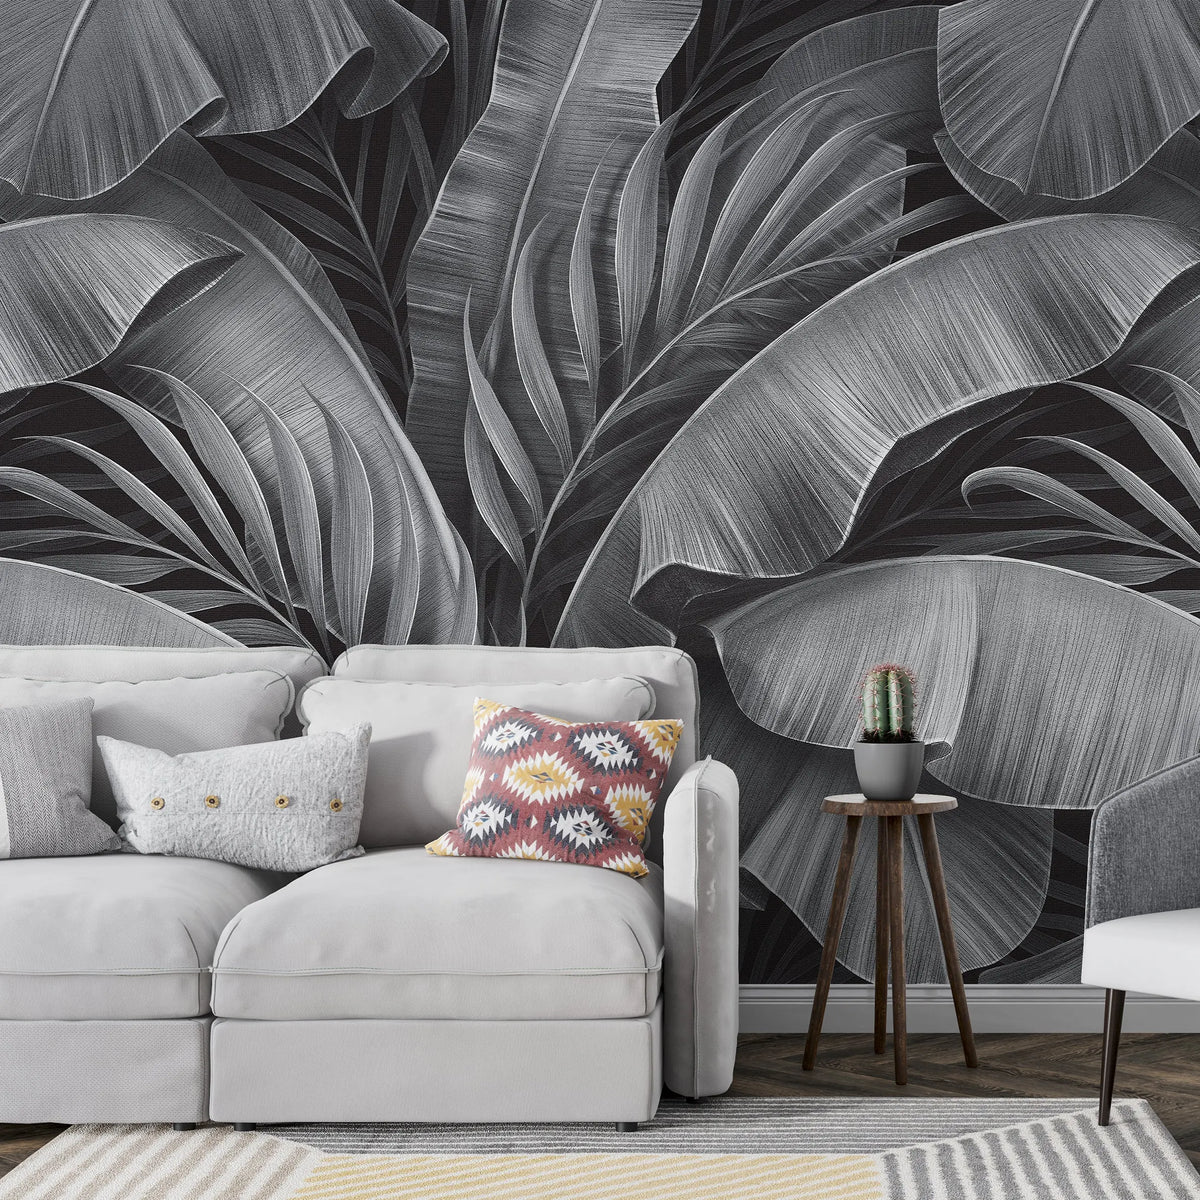 3075-E / Peel and Stick Boho Wallpaper: Tropical Palm Leave Design, Perfect for Accent Wall Decor - Artevella